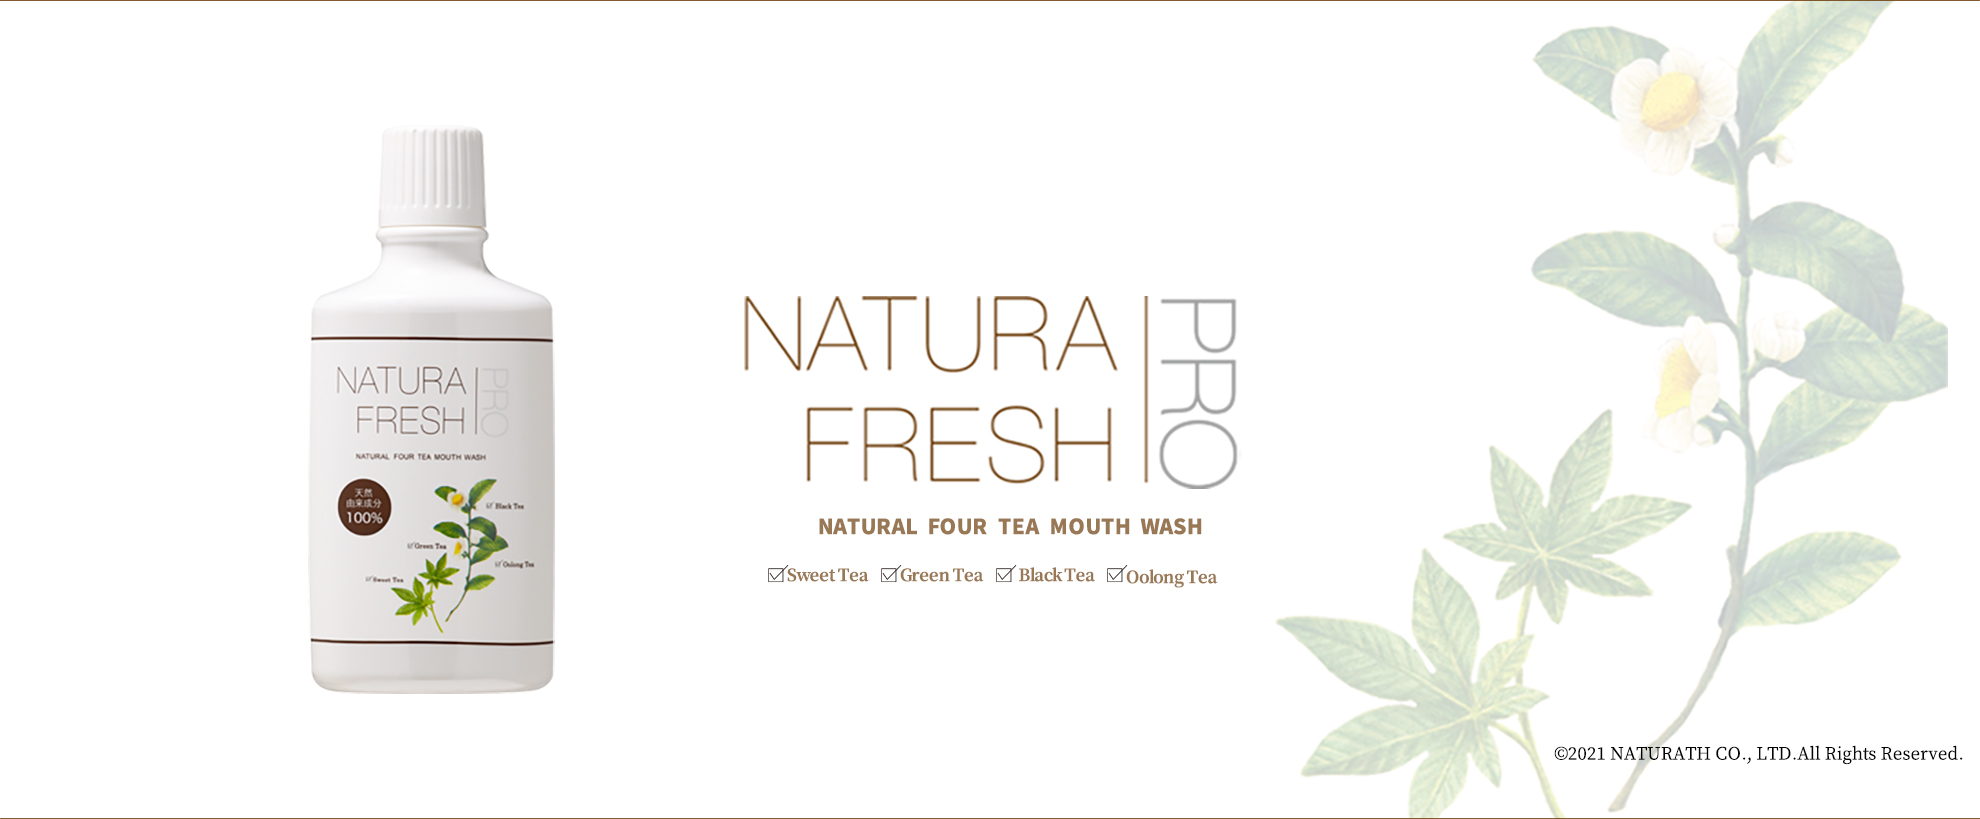 Naturathオフィシャルサイト - 手軽に栄養補給やリフレッシュできる 